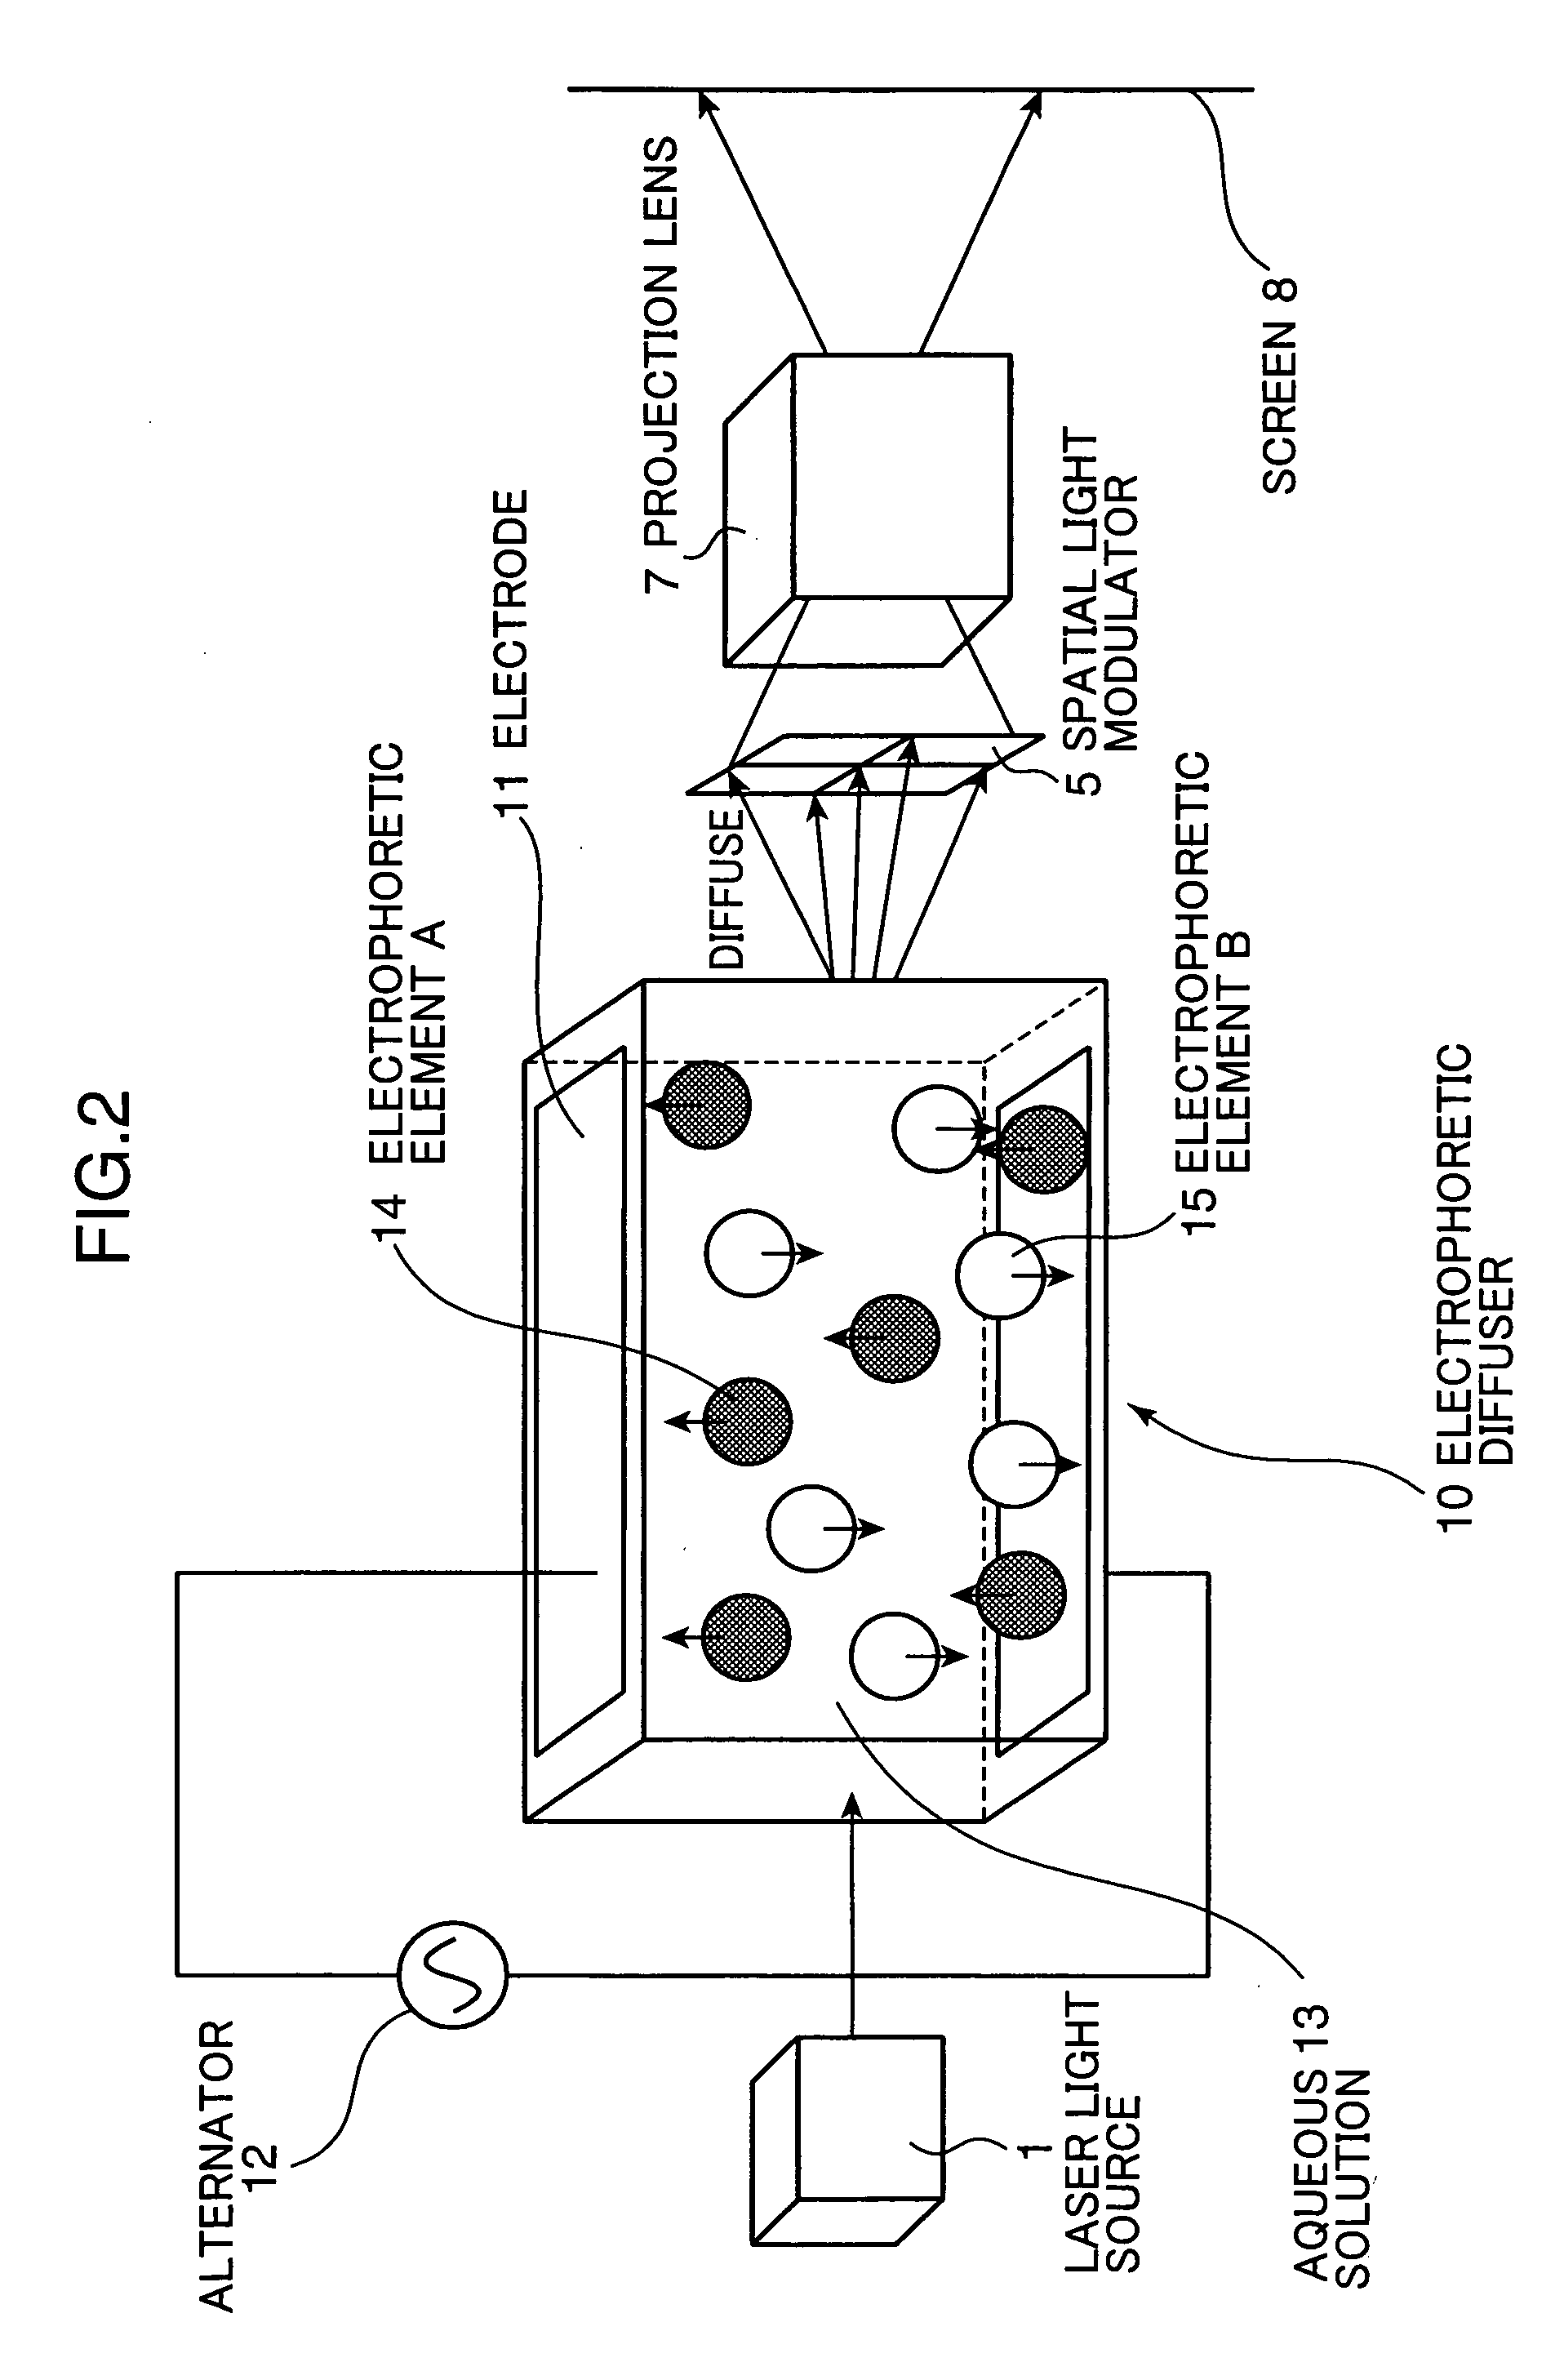 Laser image display apparatus